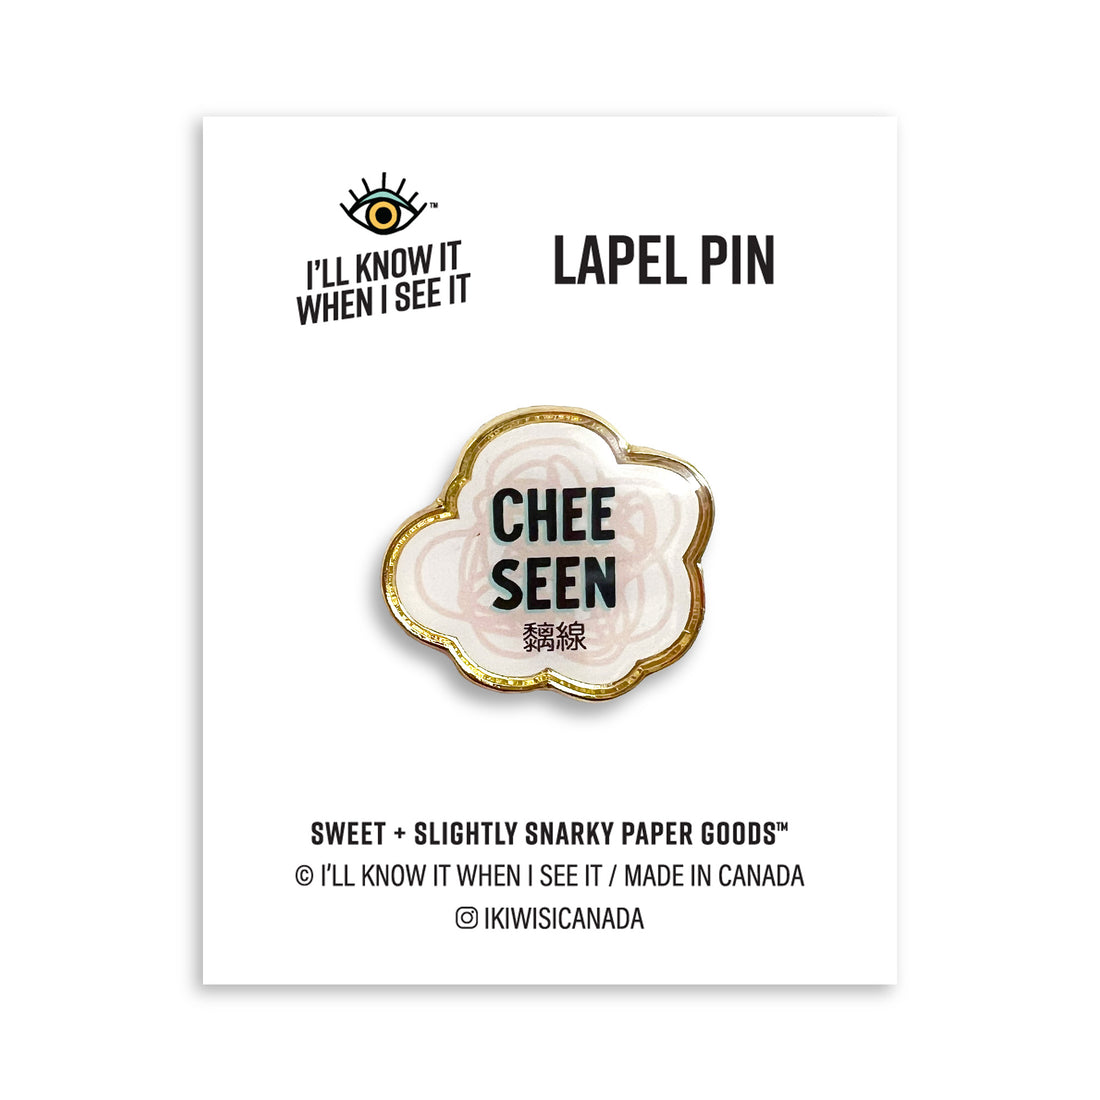 Chee seen 黐線 lapel pin by I&